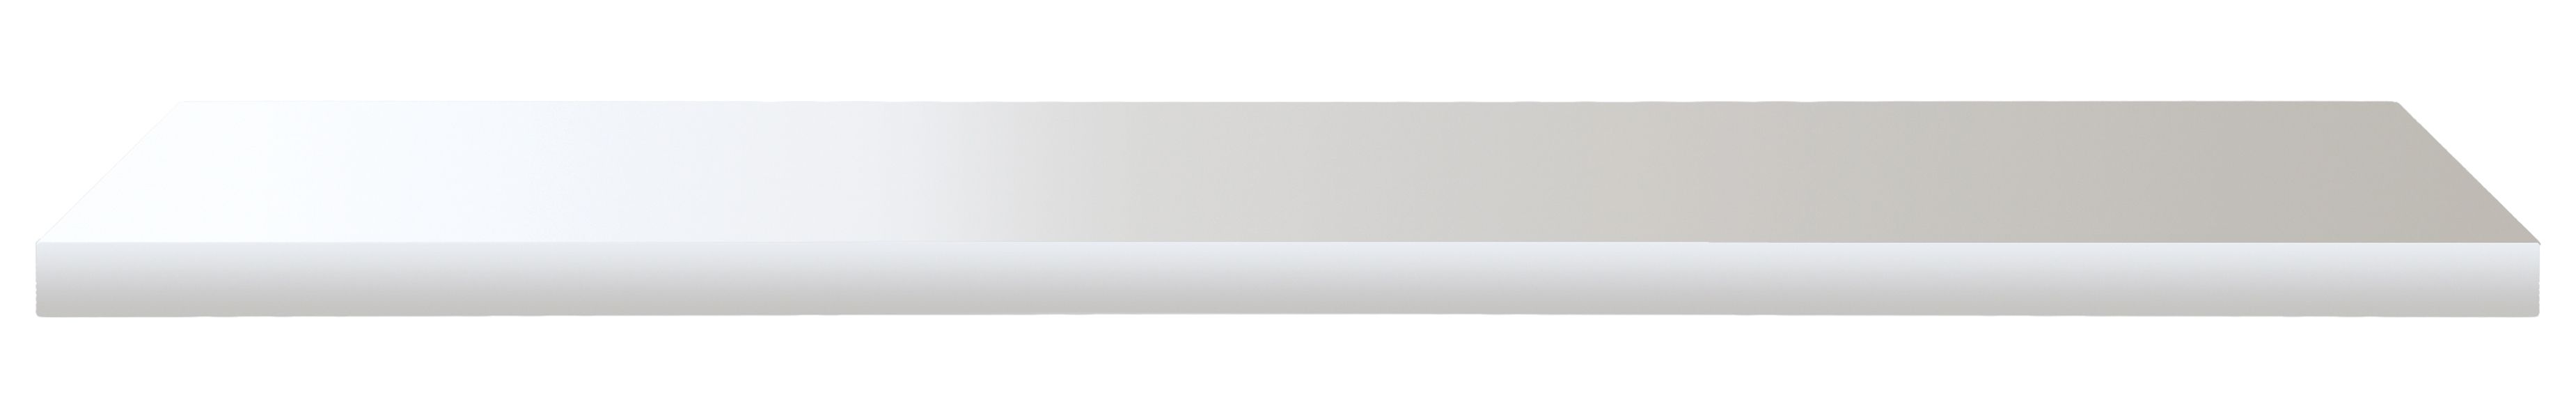 Image of Wickes Gloss White Radiator Shelf - 18 x 150 x 900mm